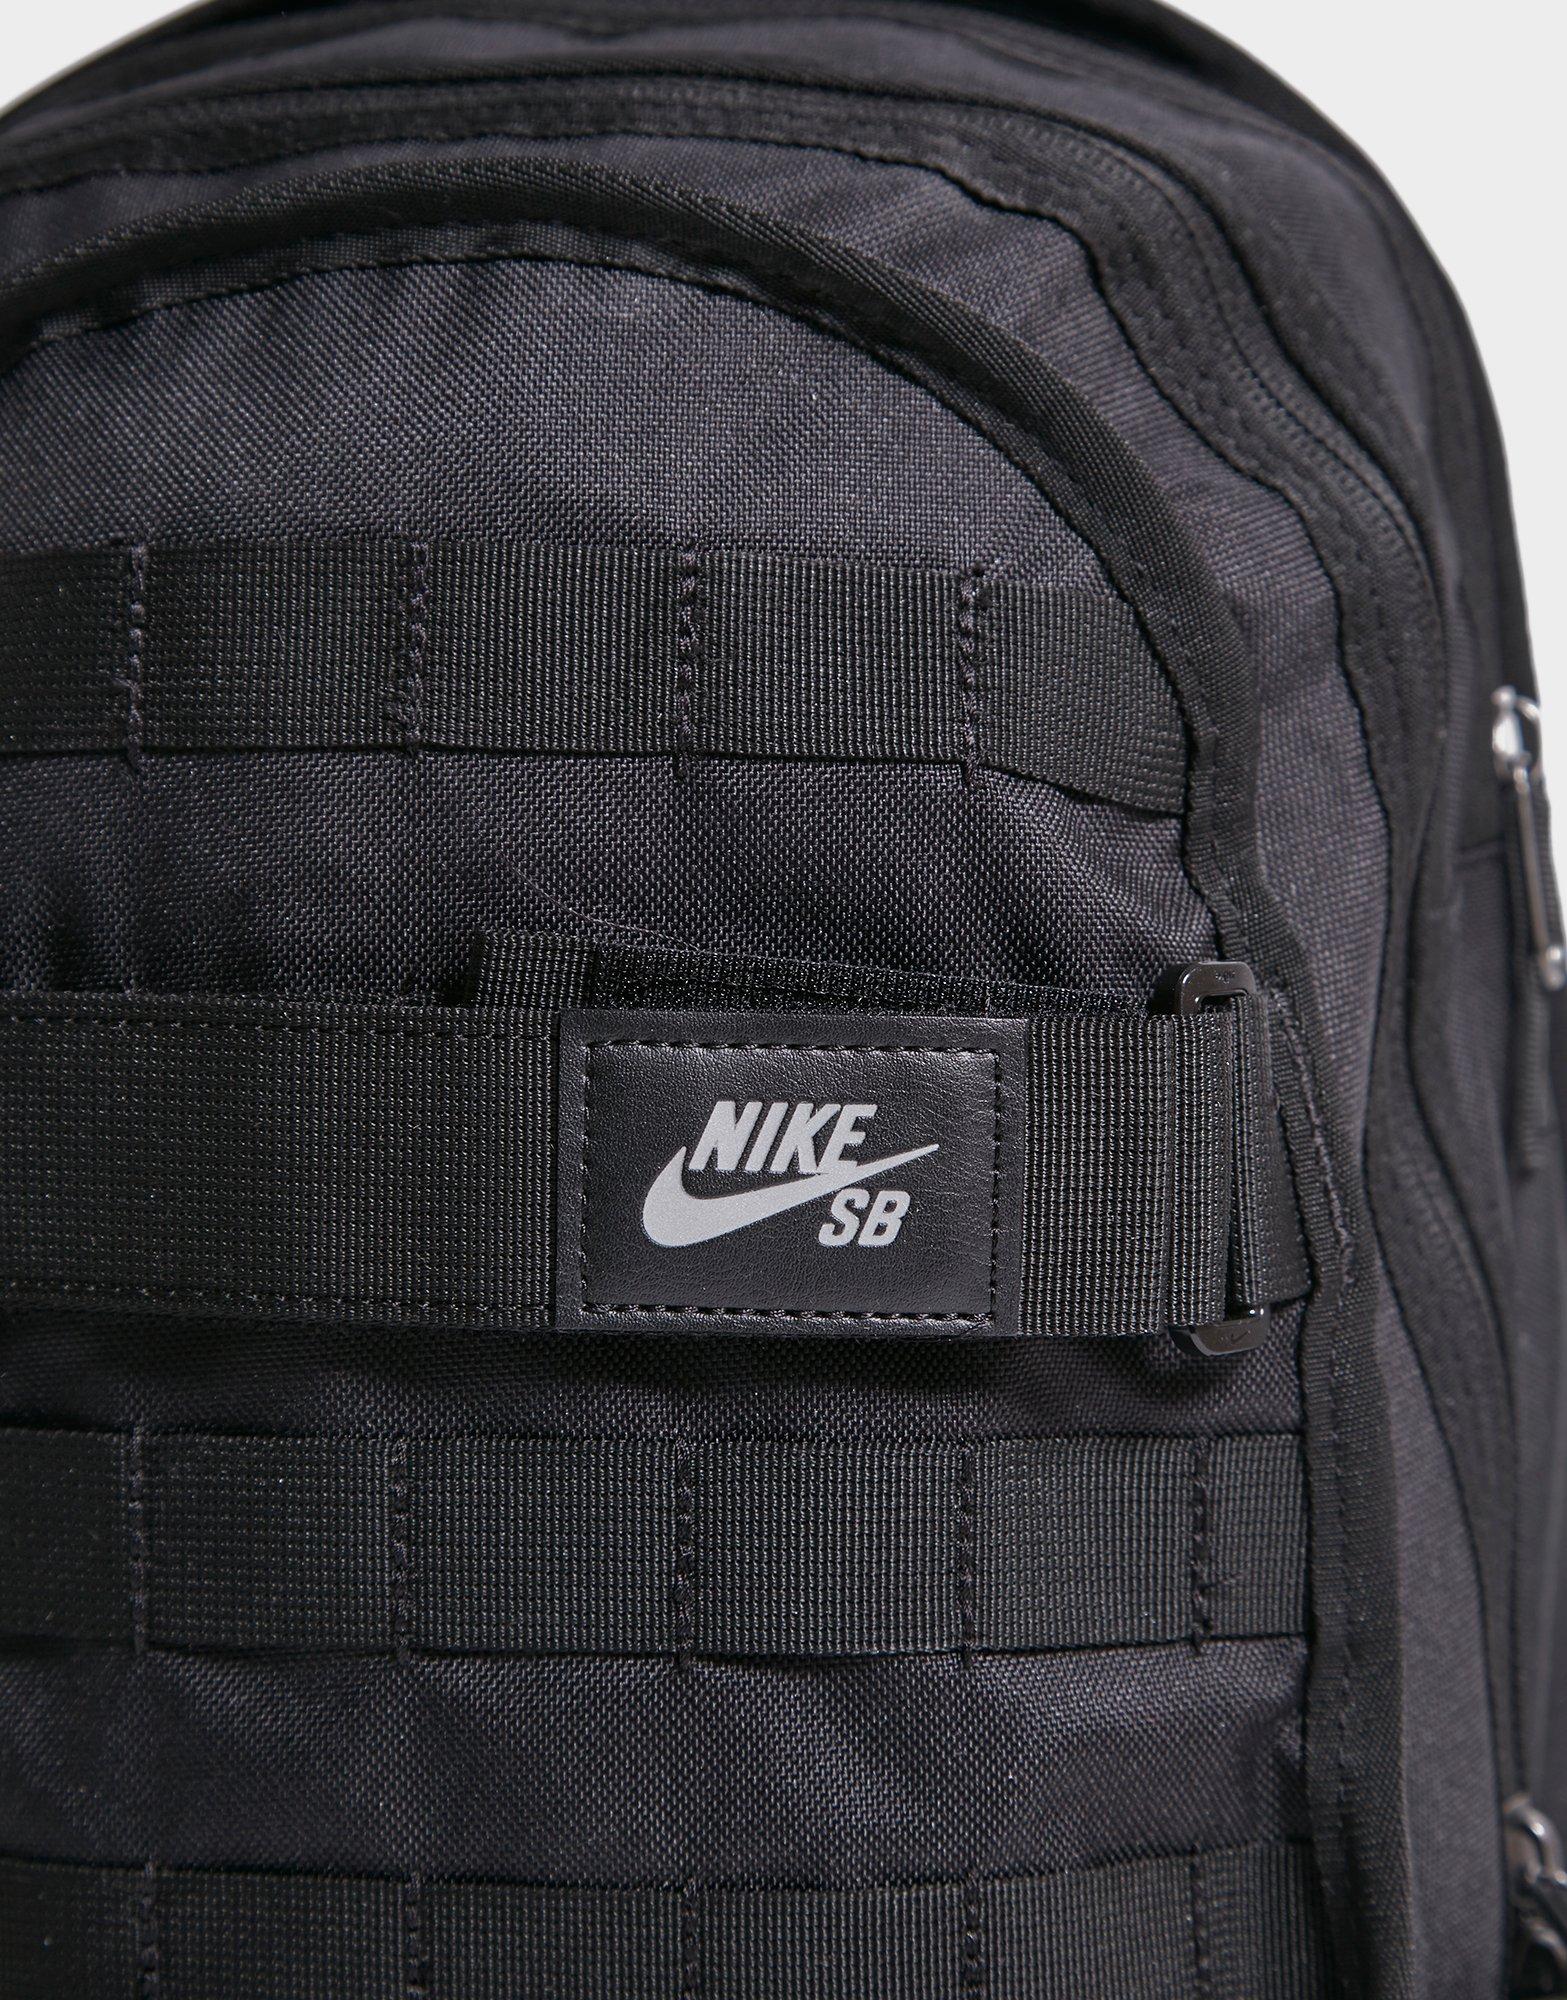 Nike Sb Rpm Backpack Online